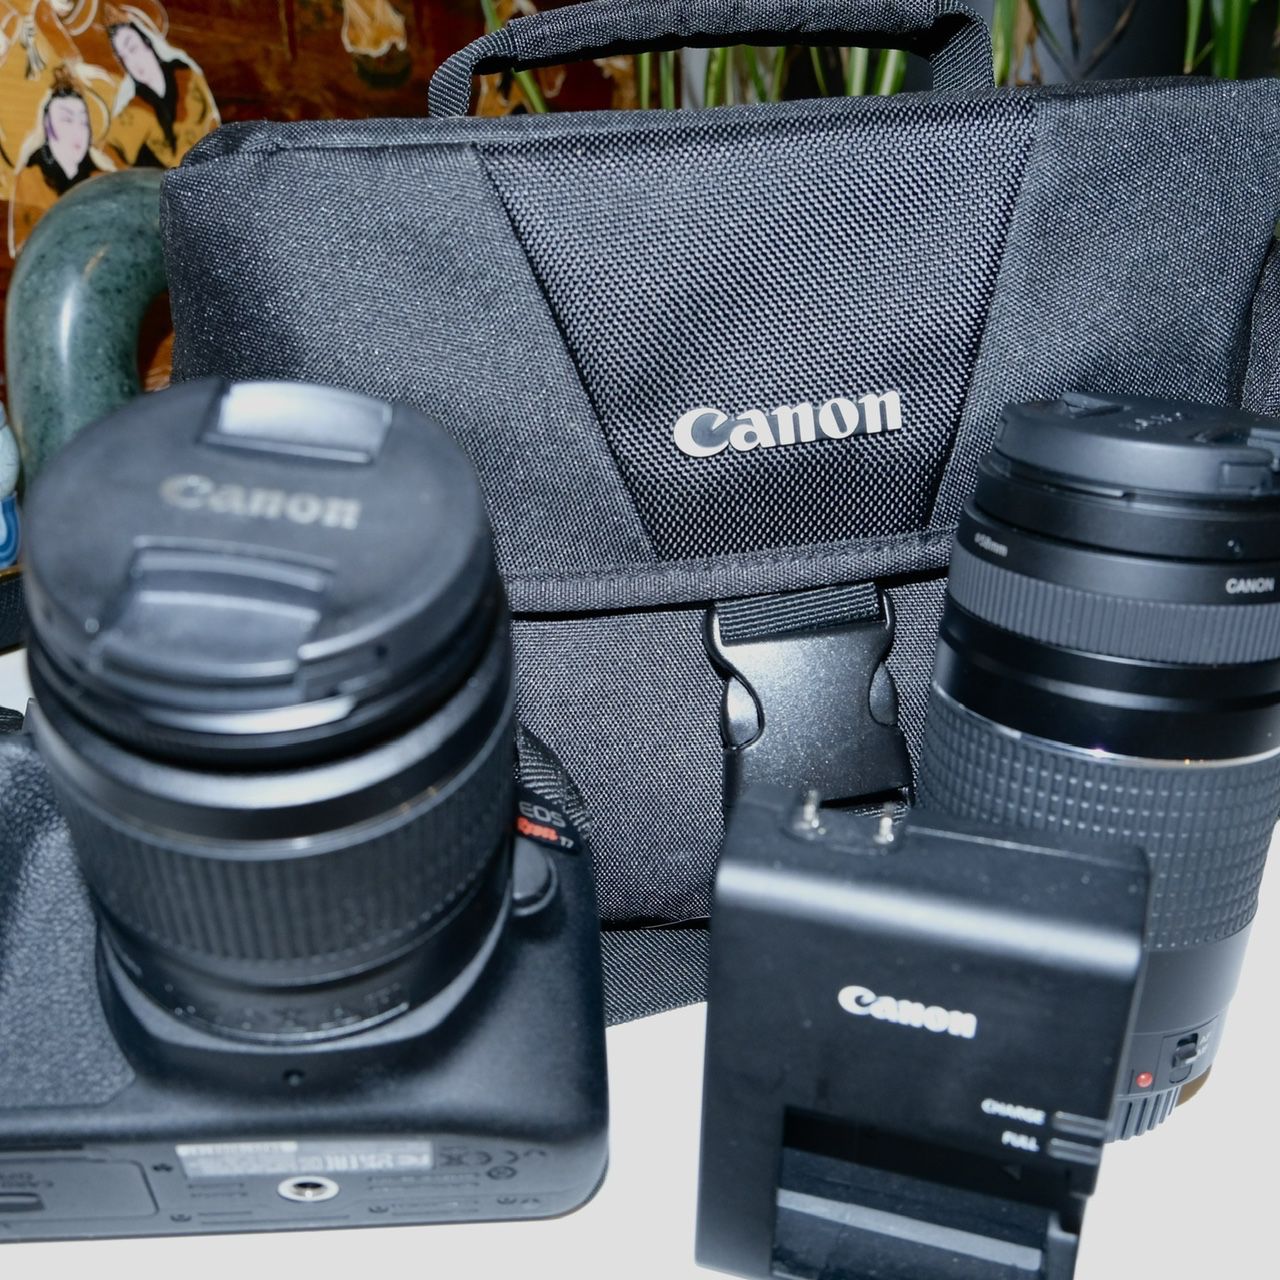 Canon EOS Rebel T7 DSLR Camera with 18-55mm Len,75-300mm Lens.